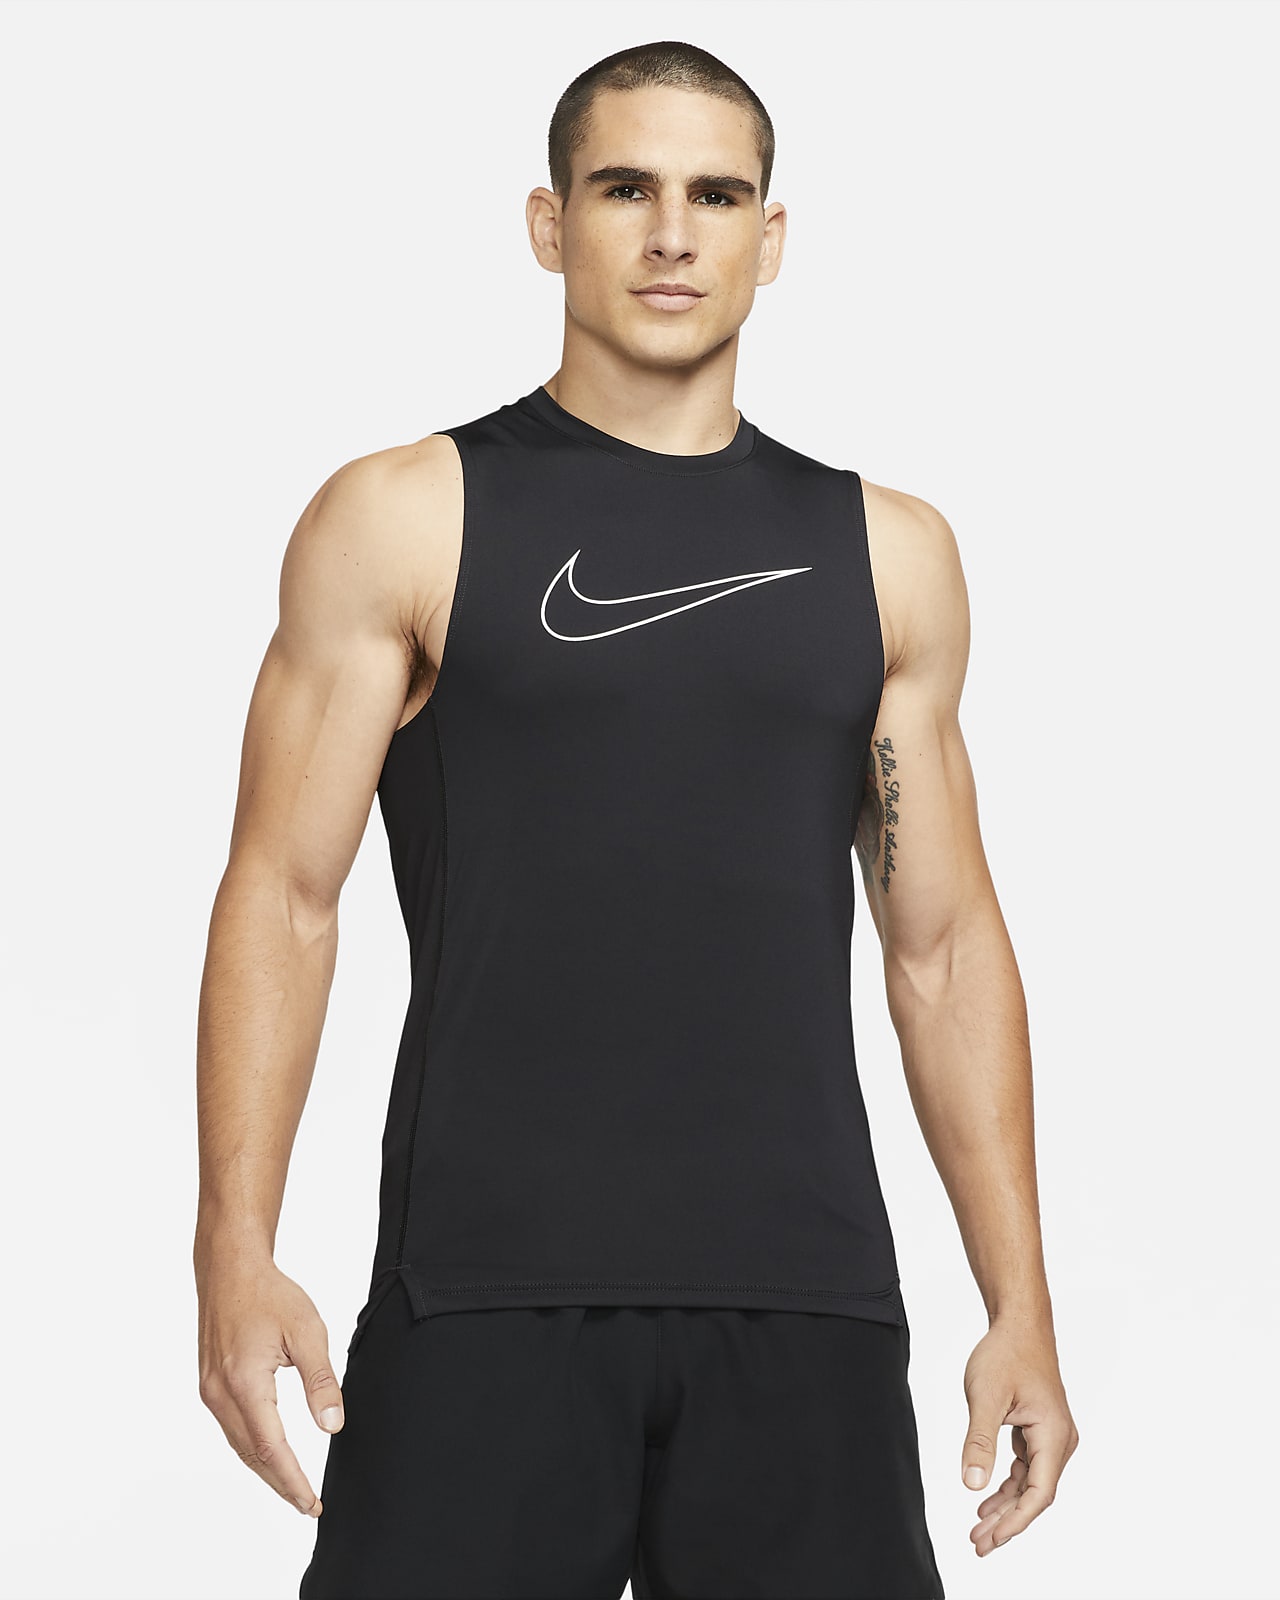 Camiseta sinmangas y slim para Nike Pro Nike.com